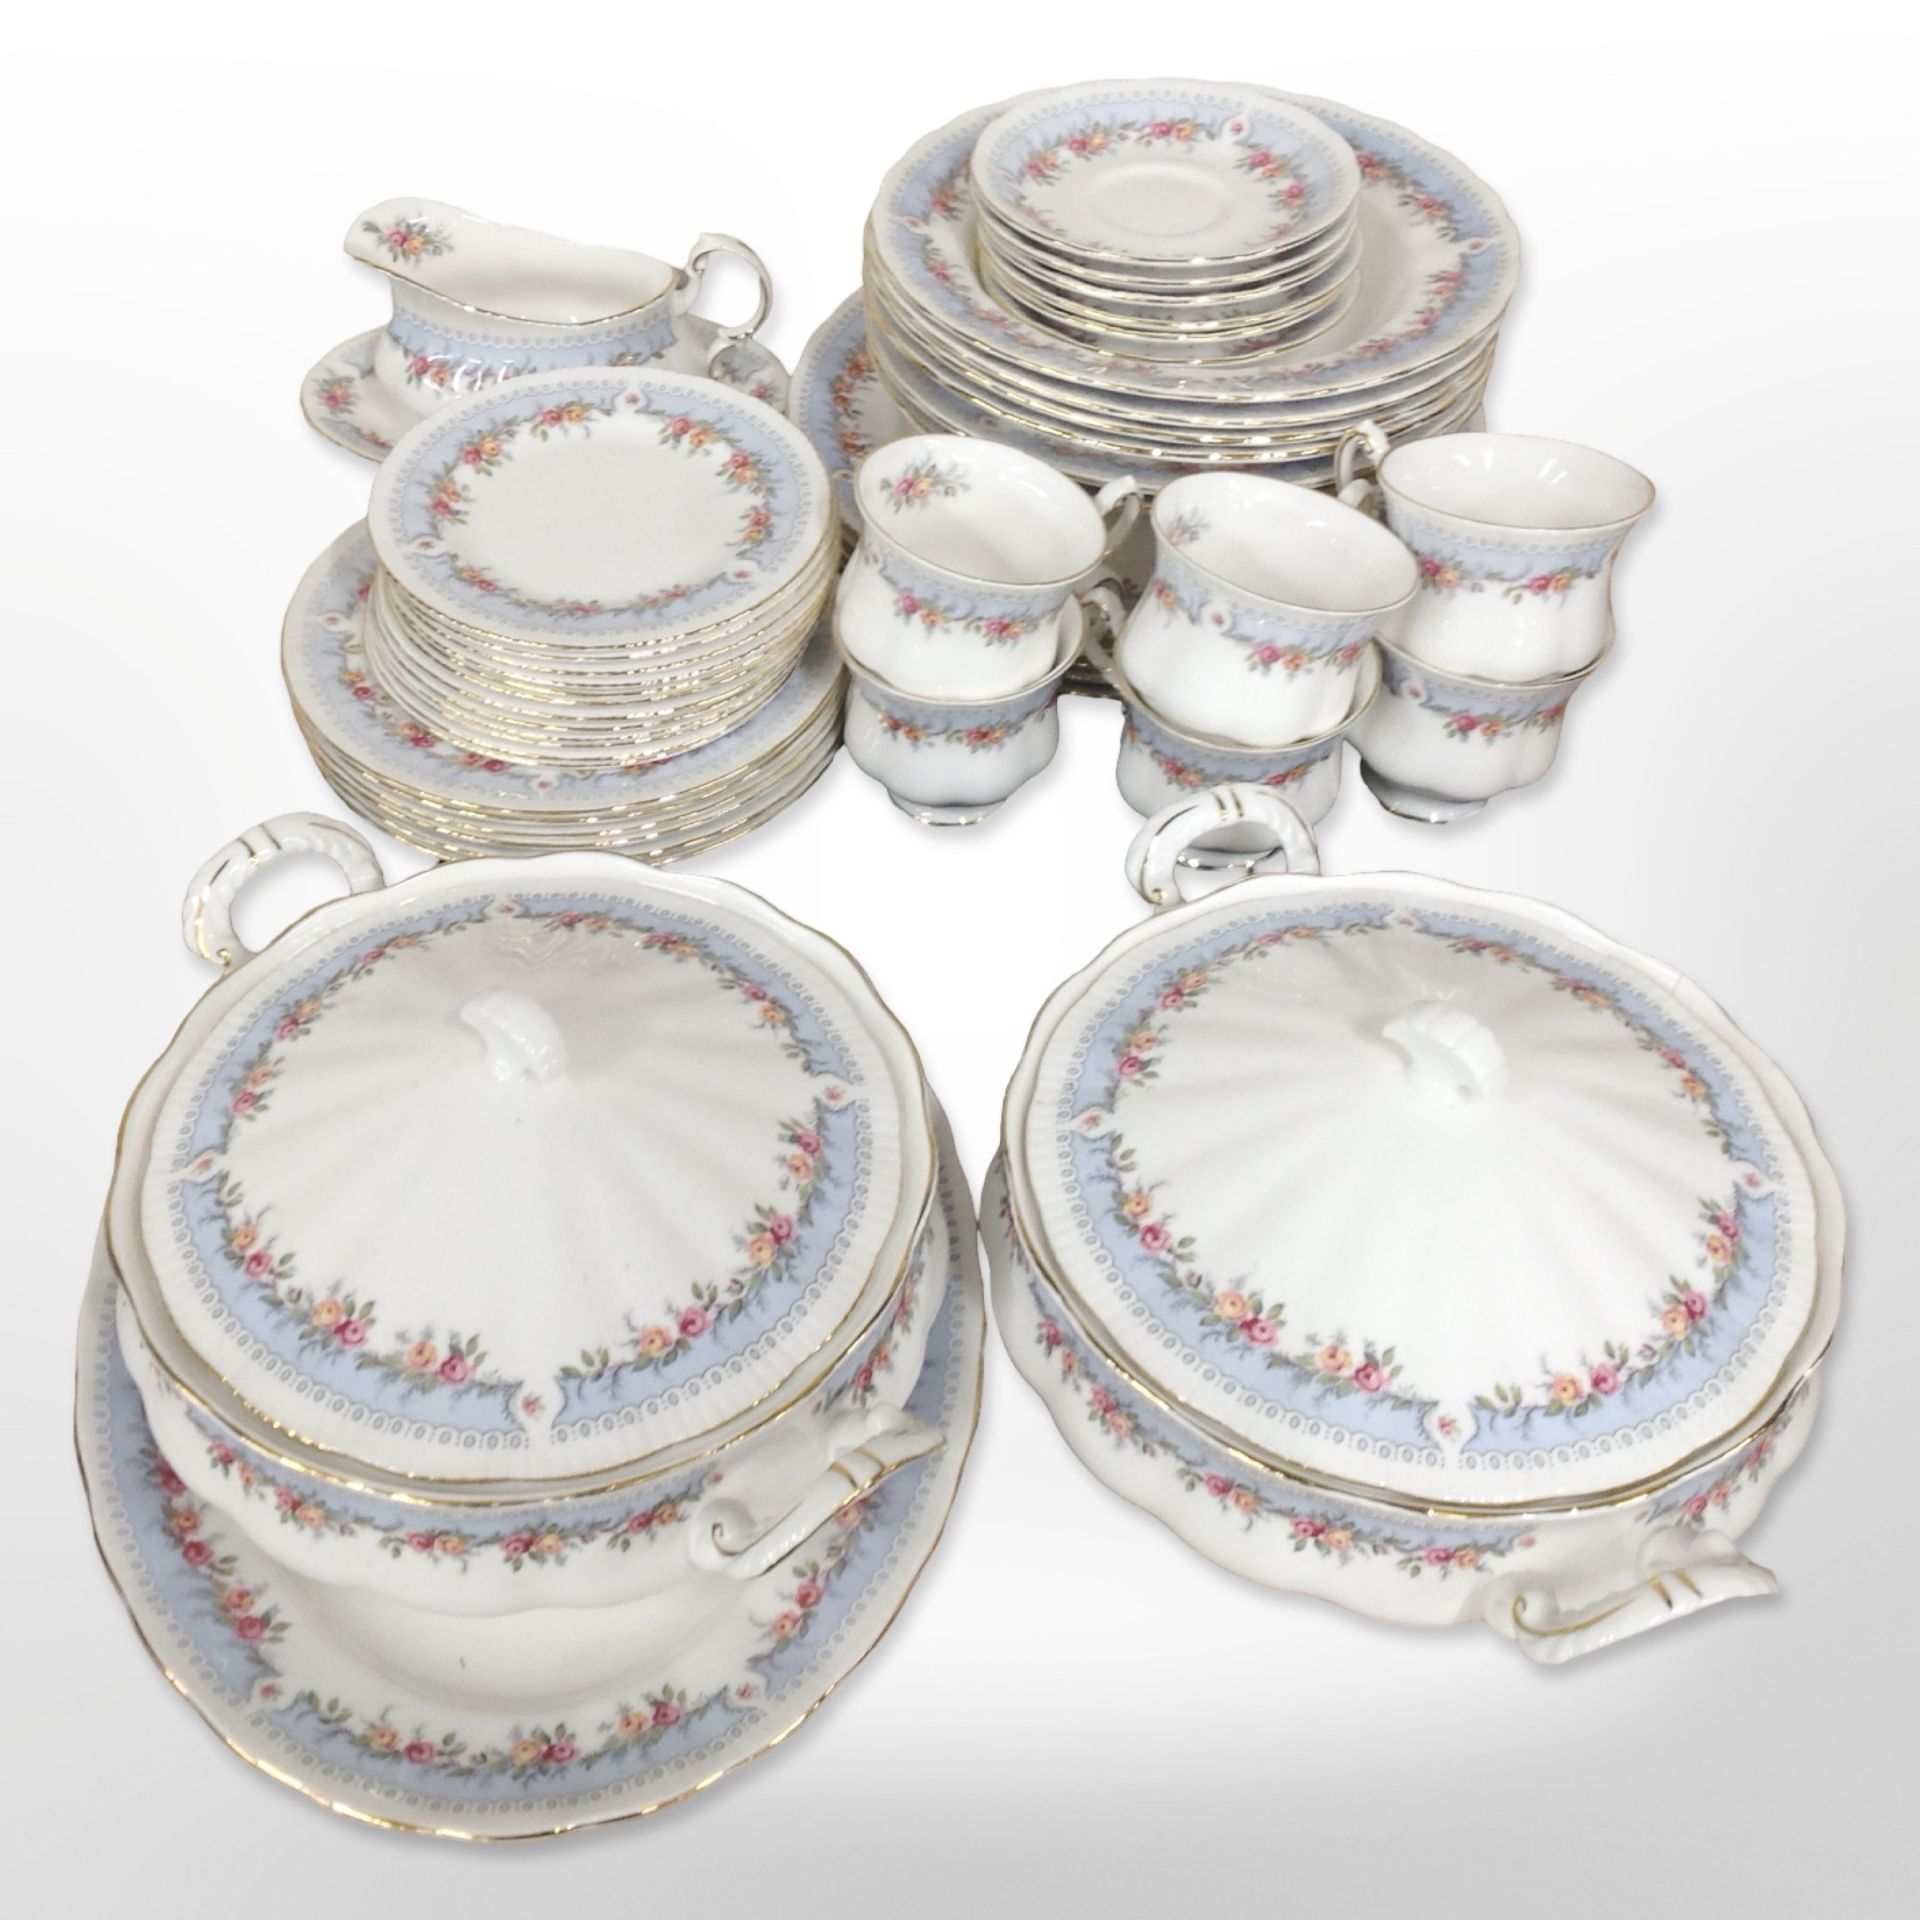 48 pieces of Paragon Bridesmaid tea and dinner porcelain.